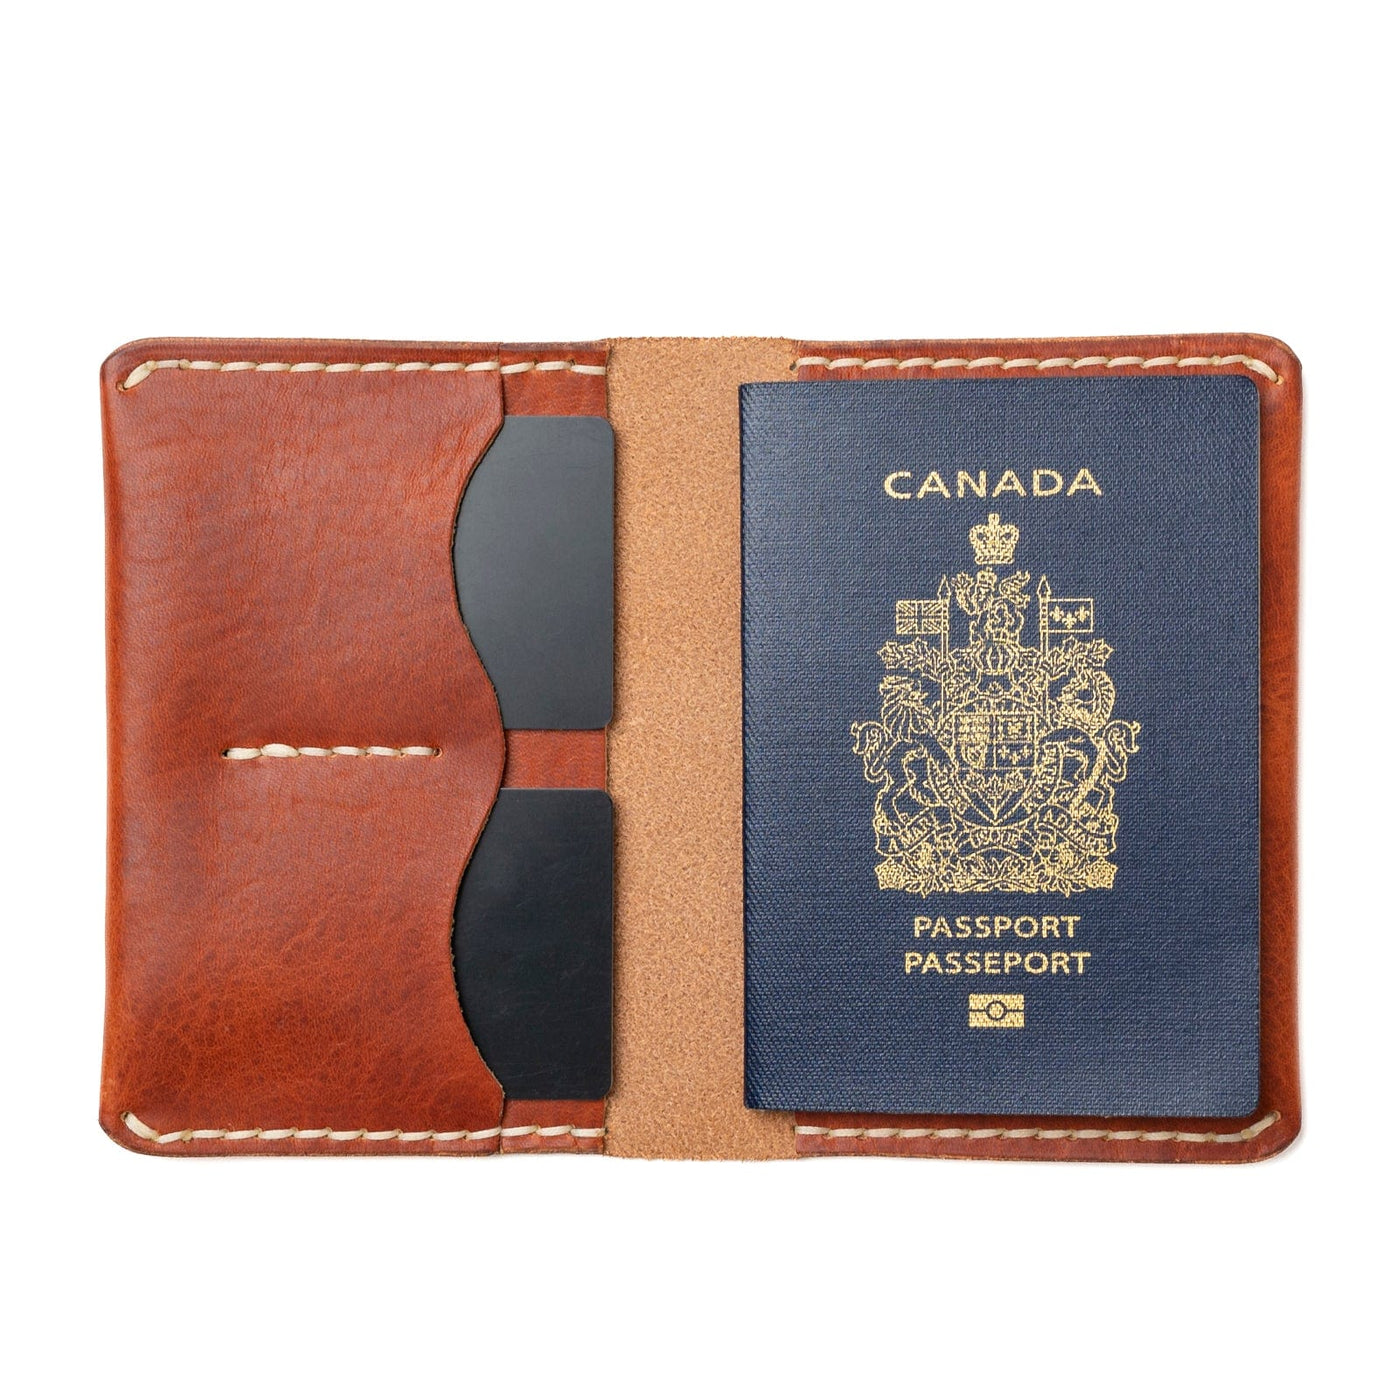 Leather Passport Cover - English Tan Popov Leather